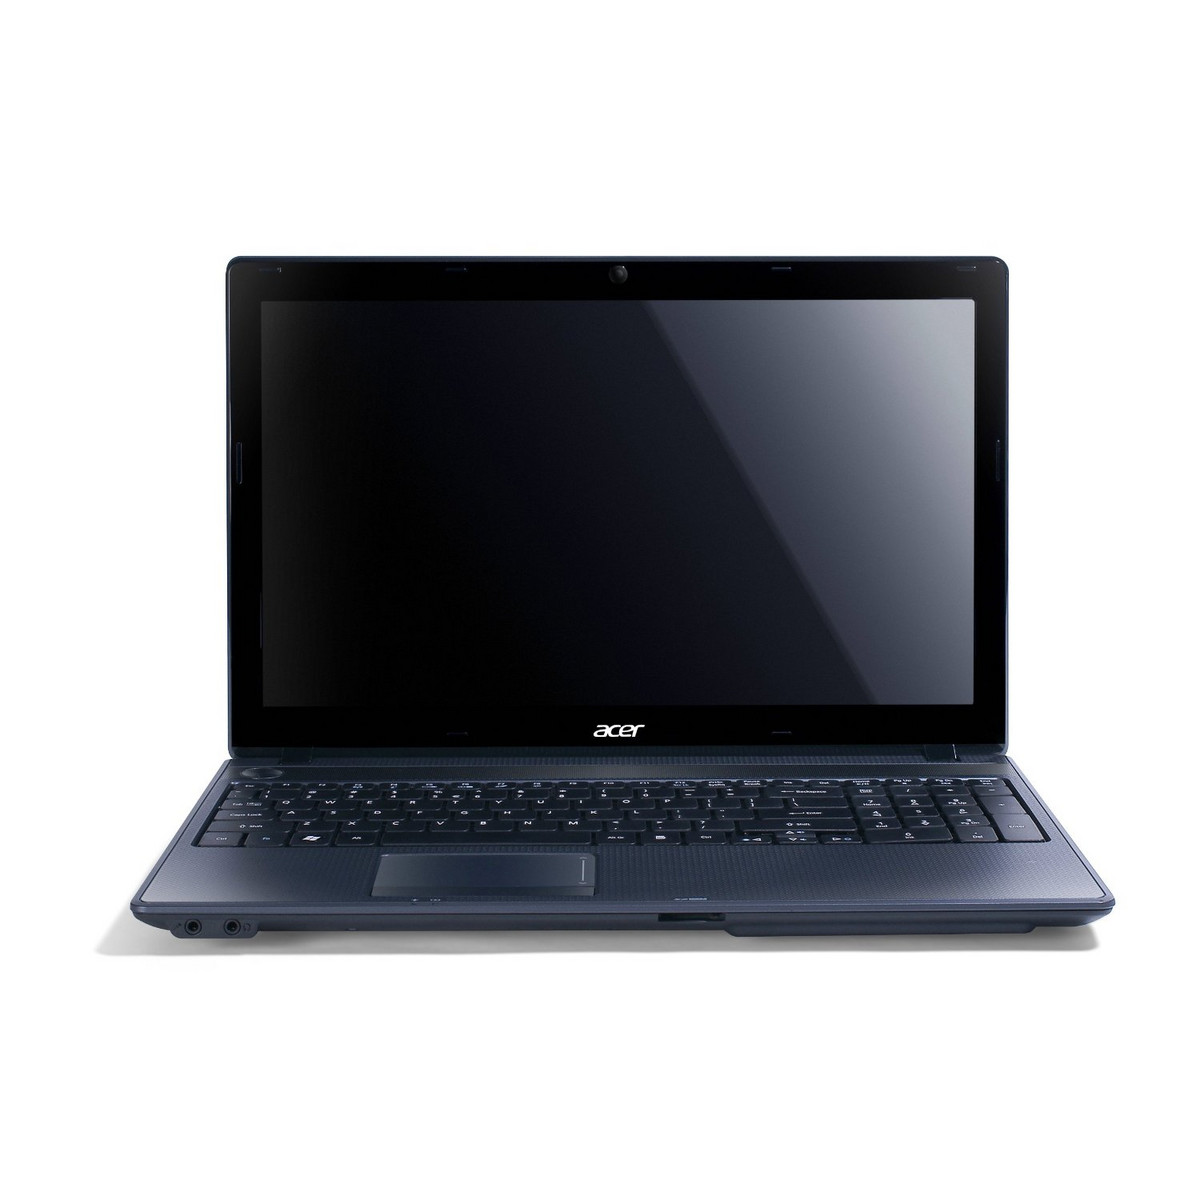 Acer Aspire 5349 Series External Reviews